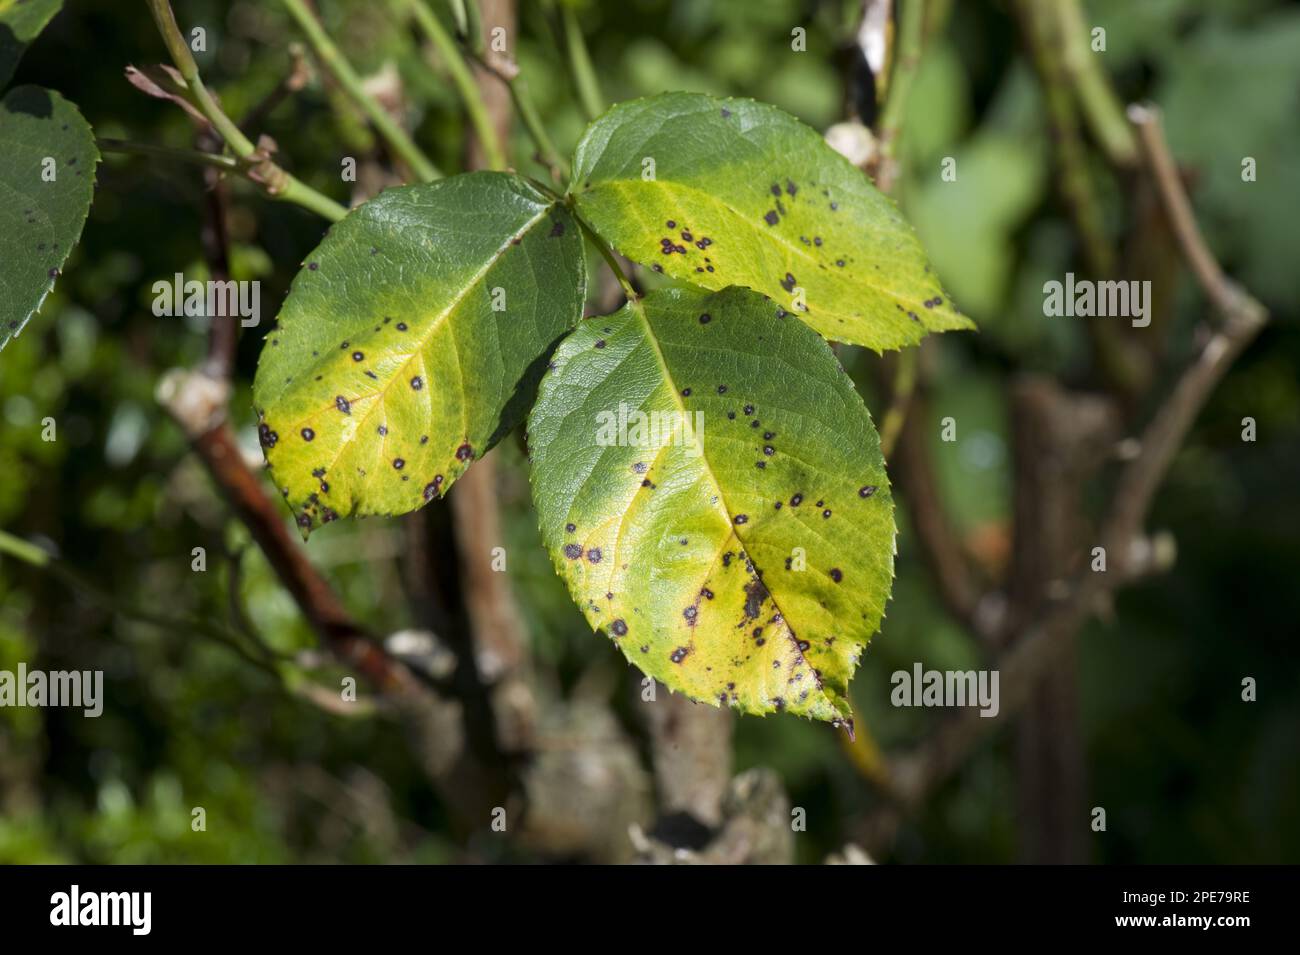 Black spot disease (Diplocarpon rosae), fungi, Rose spot, a fungal disease on rose leaves in summer Stock Photo